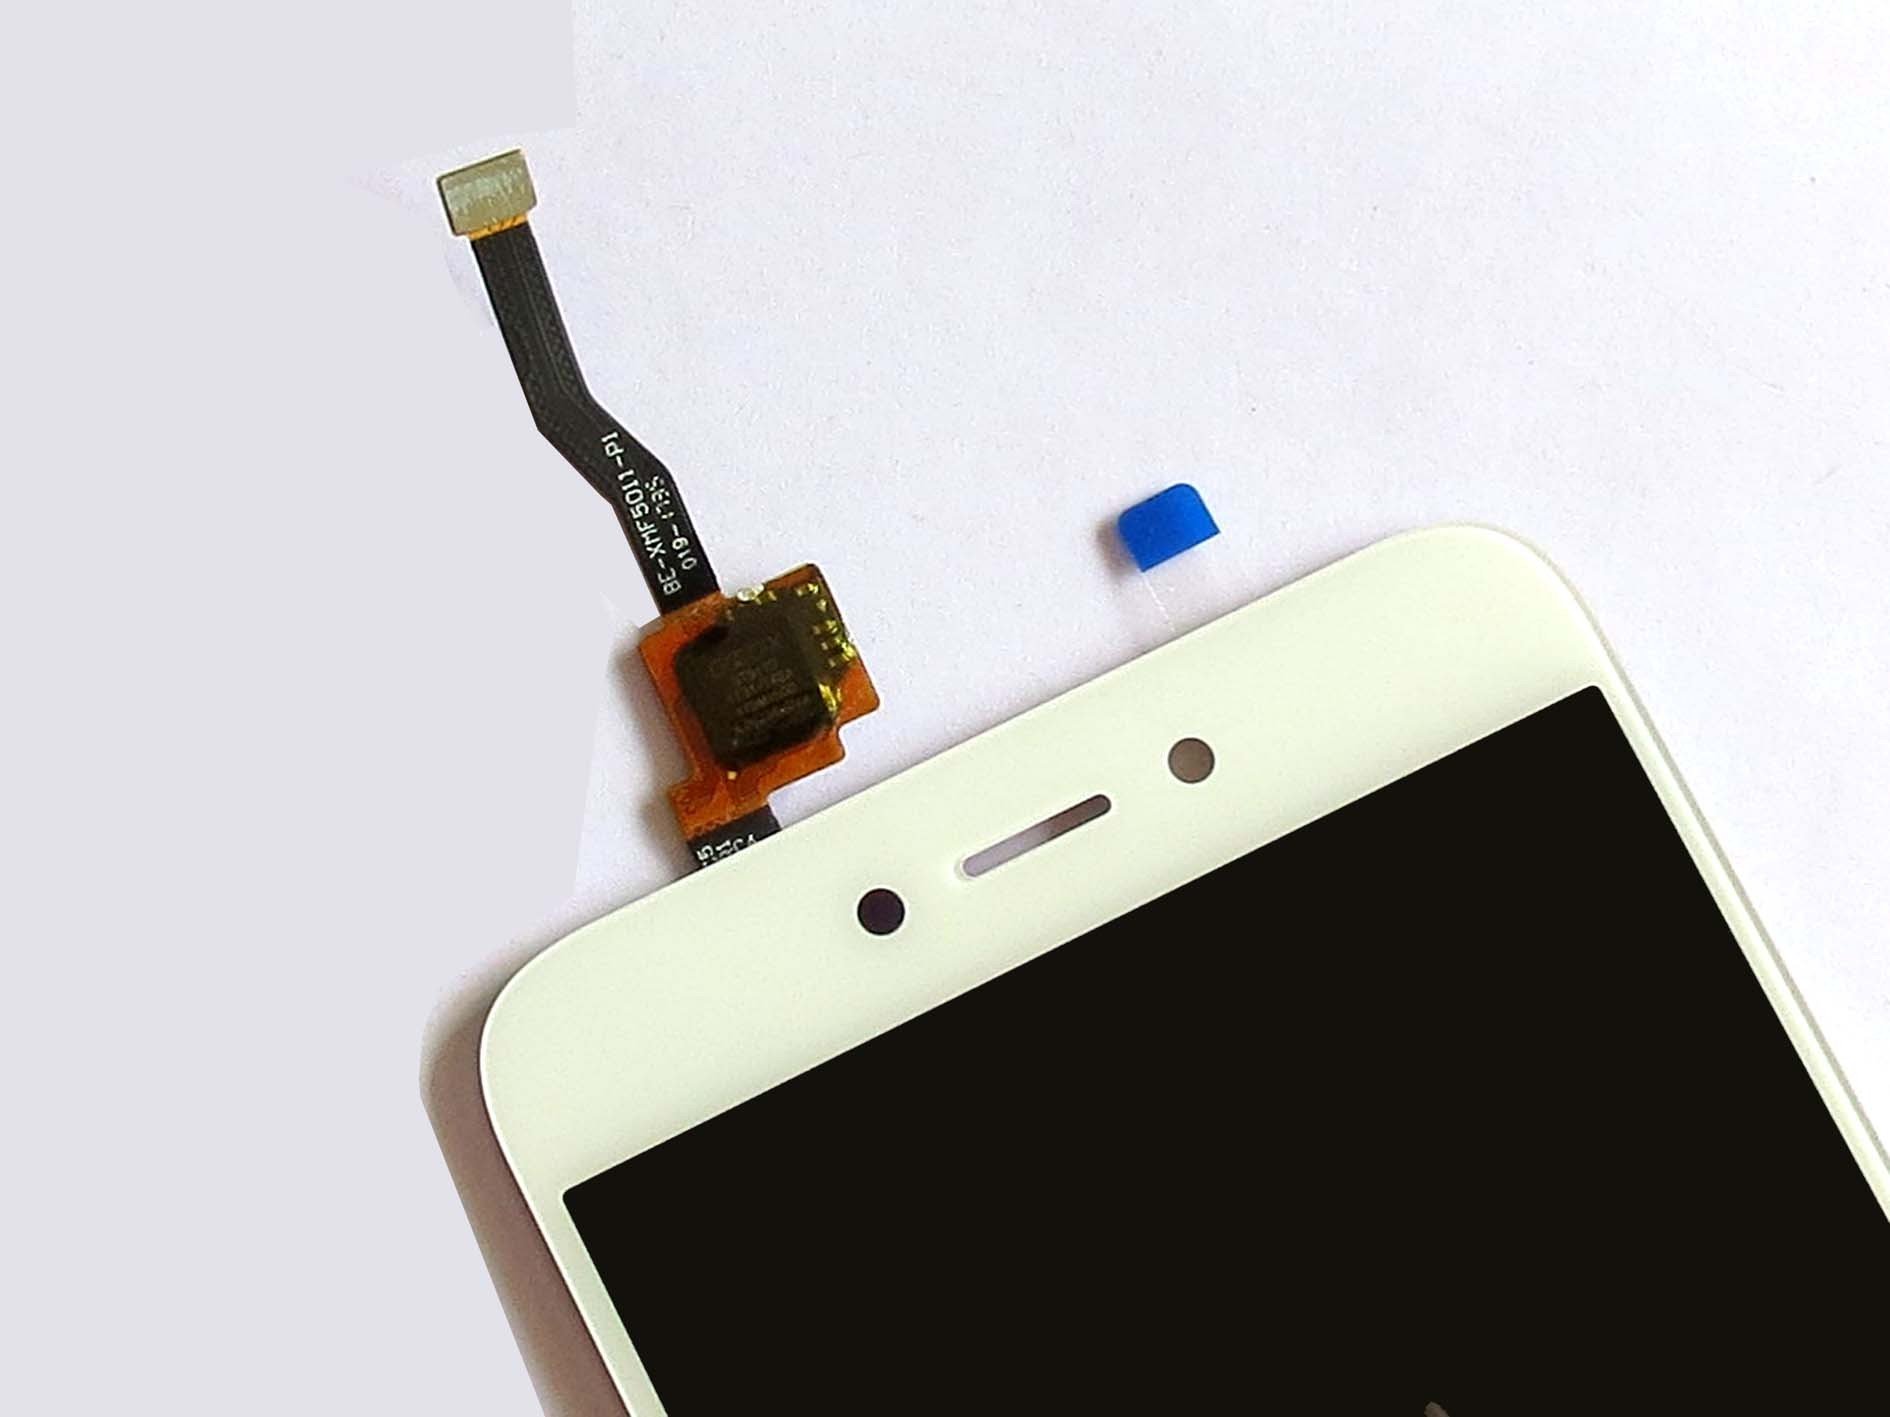 Дисплей (экран) для Xiaomi Redmi 5a c тачскрином, (white) - фото